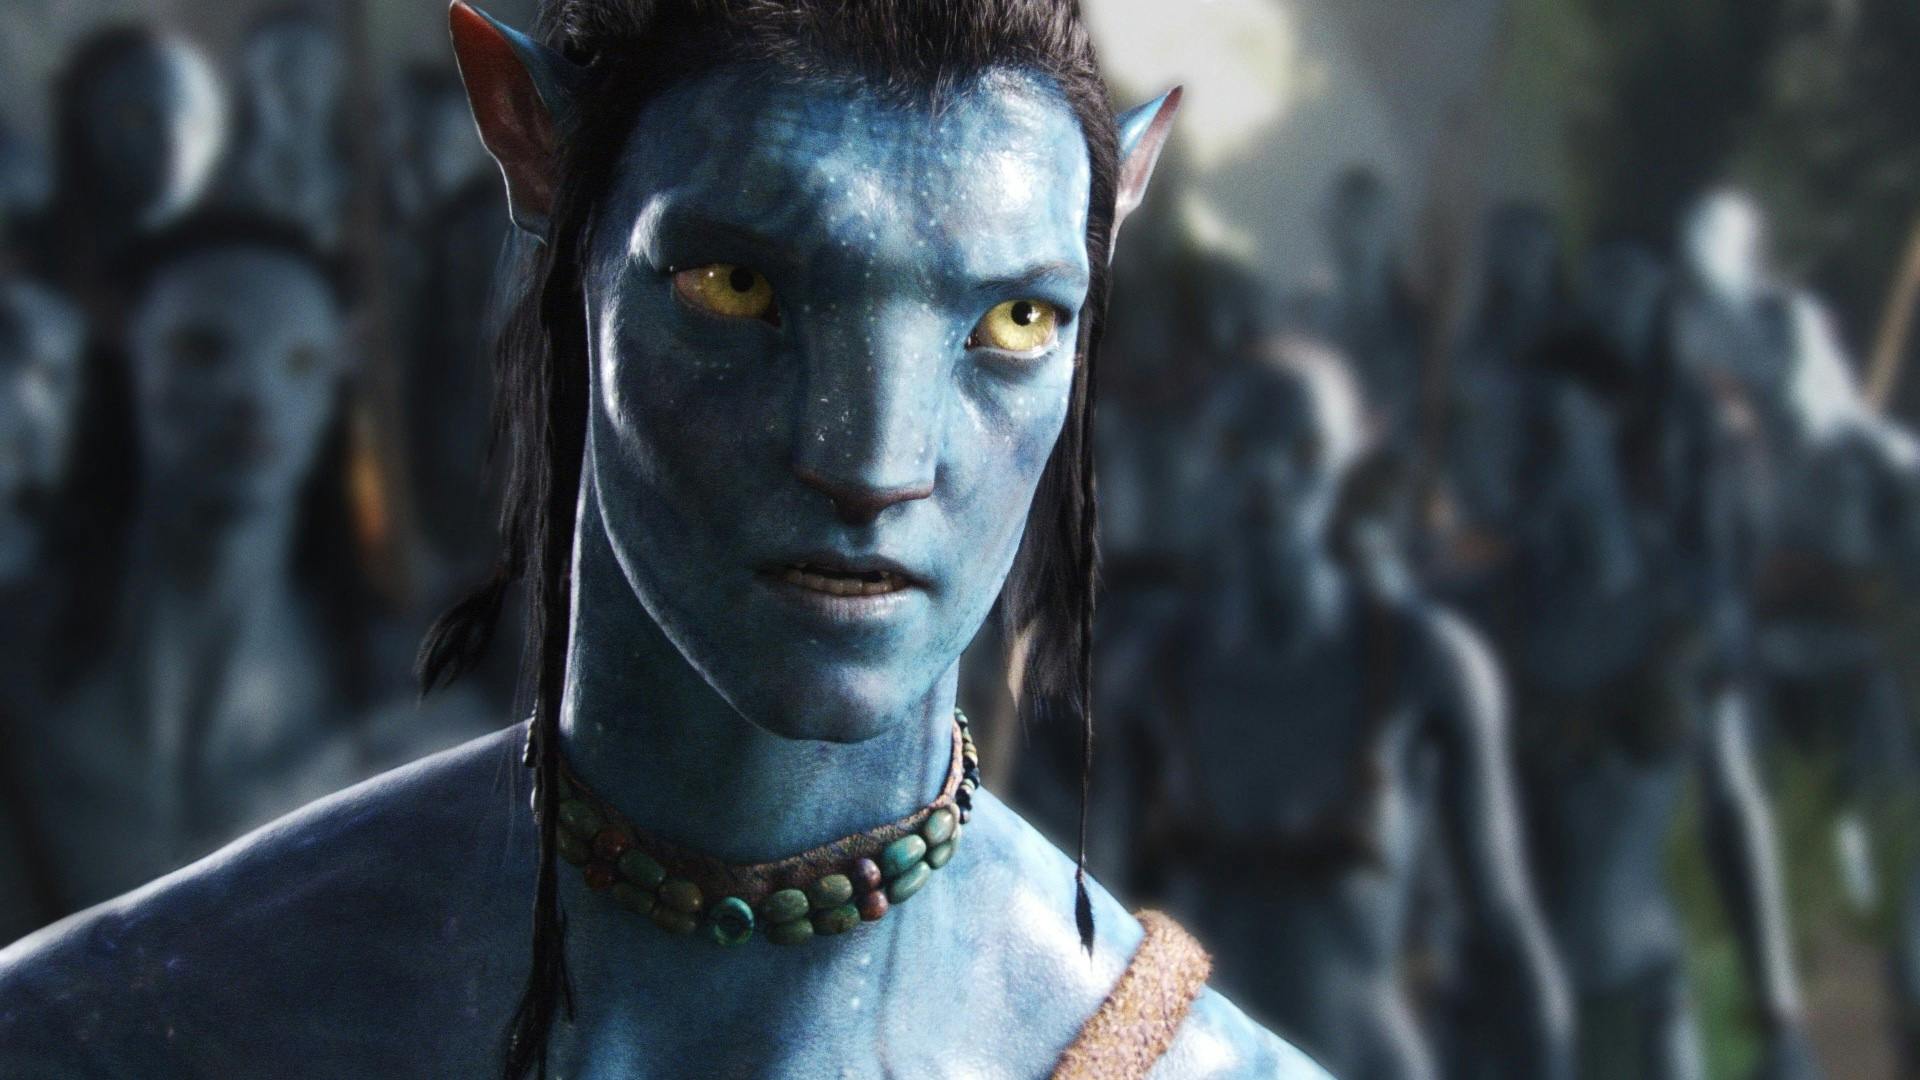 OC Avatar the Last Airbender  IMDB Scores  rdataisbeautiful